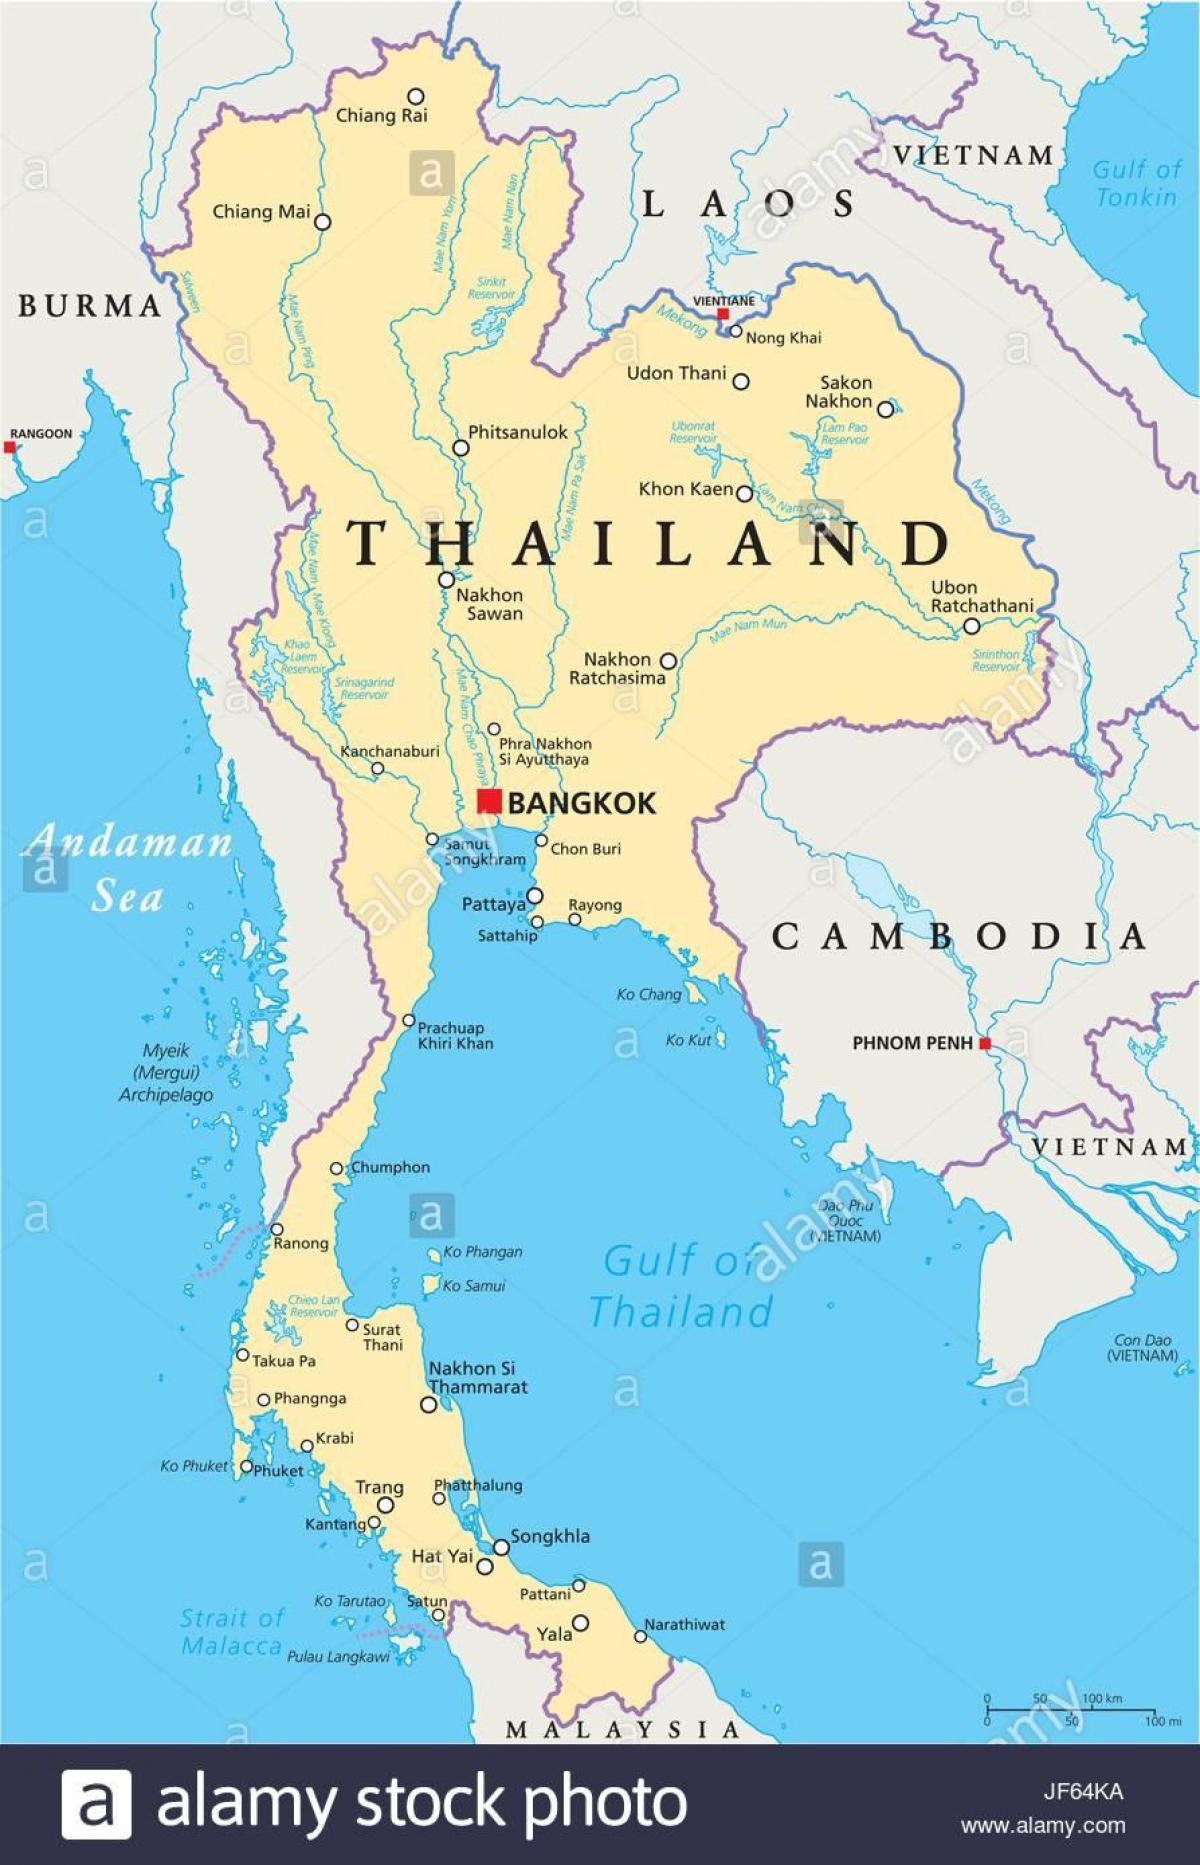 bangkok, tailandia mapa do mundo